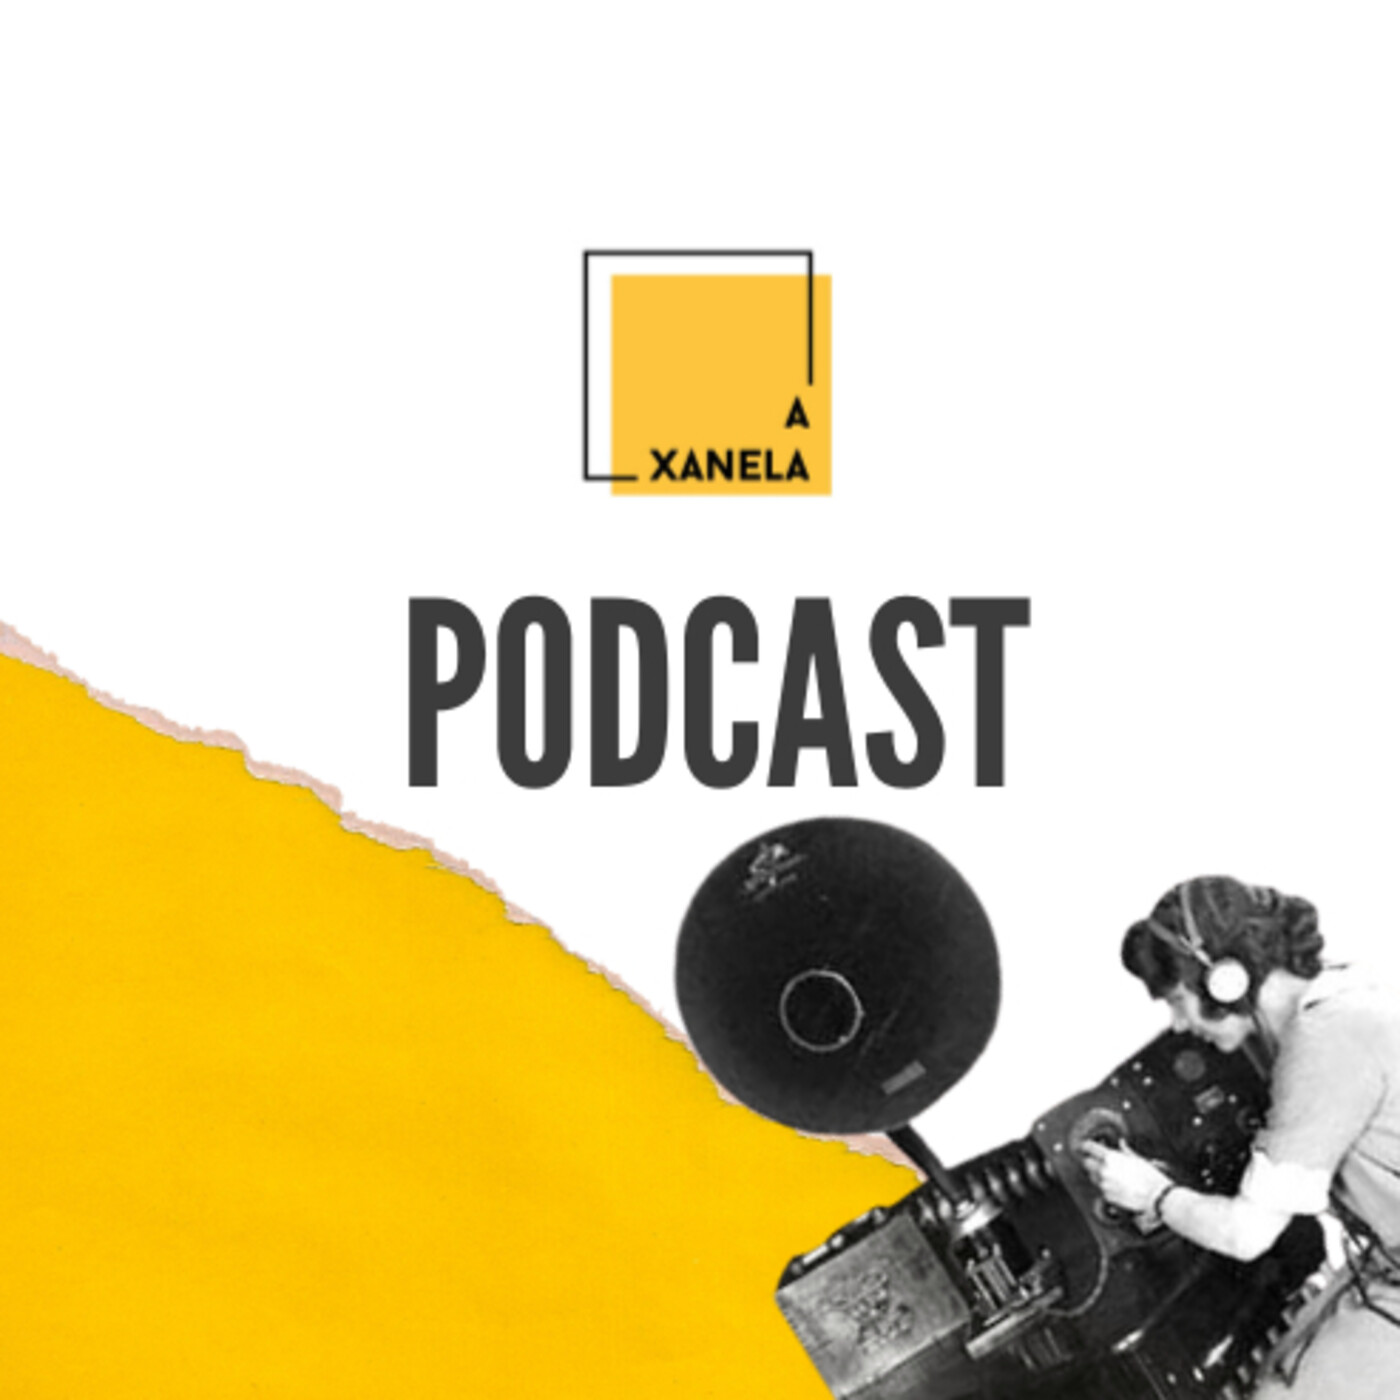 A Xanela Podcast